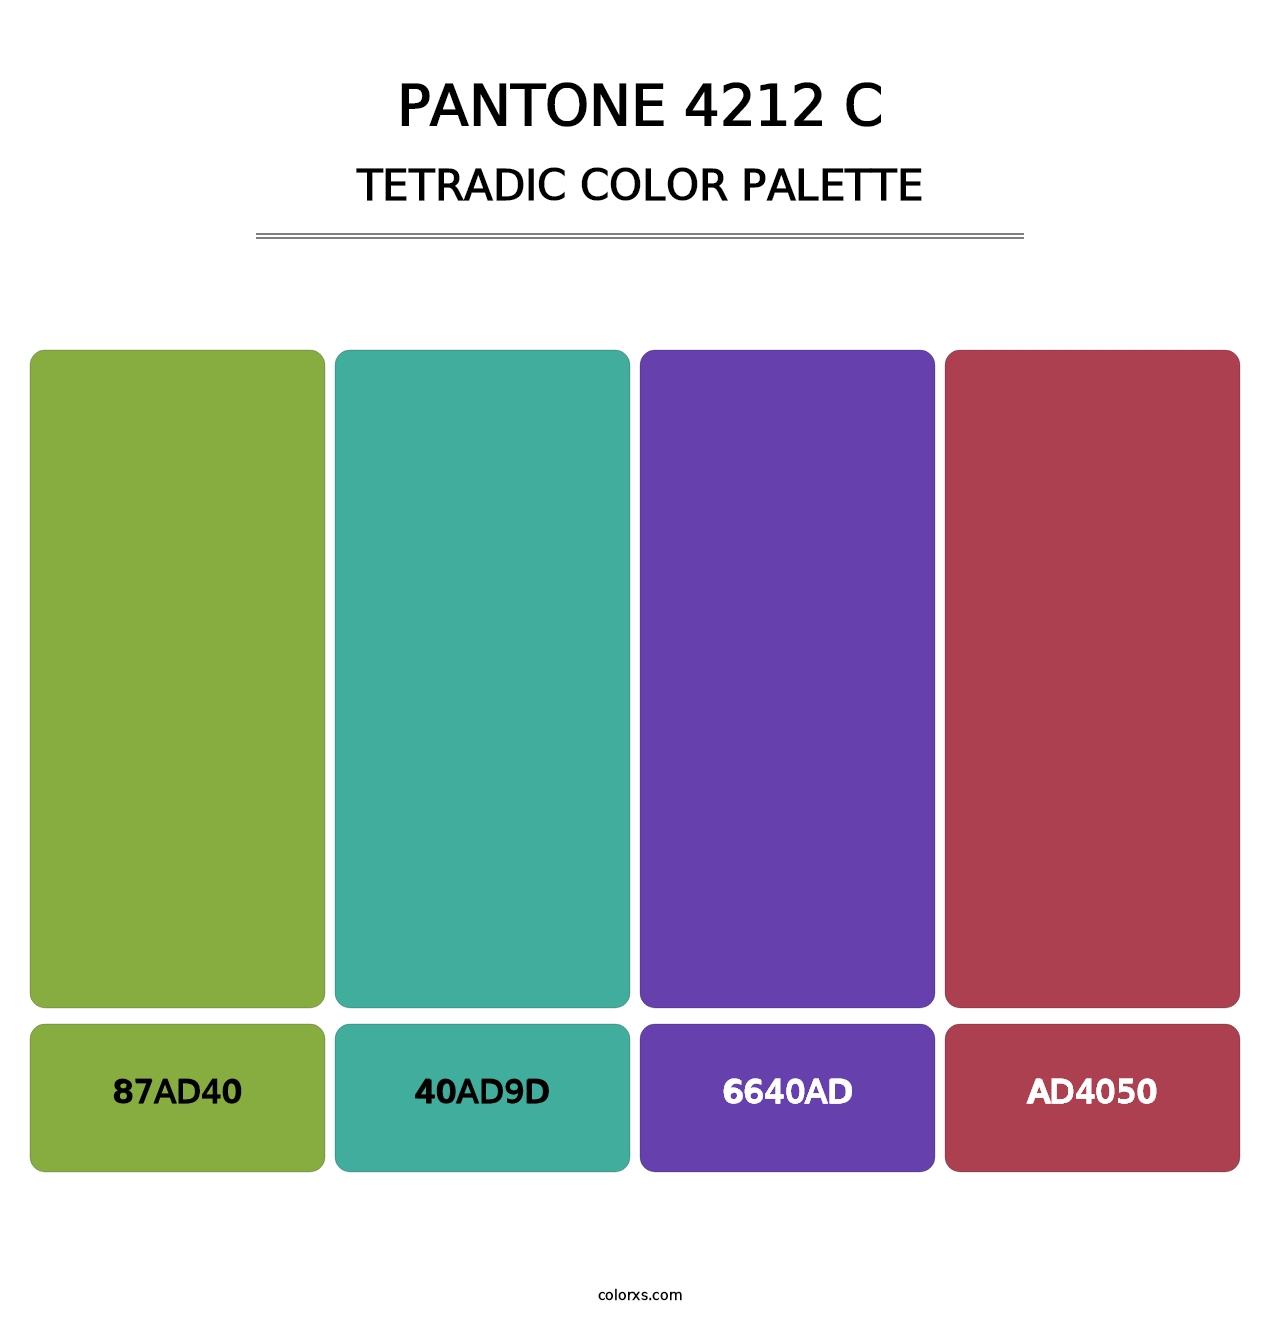 PANTONE 4212 C - Tetradic Color Palette